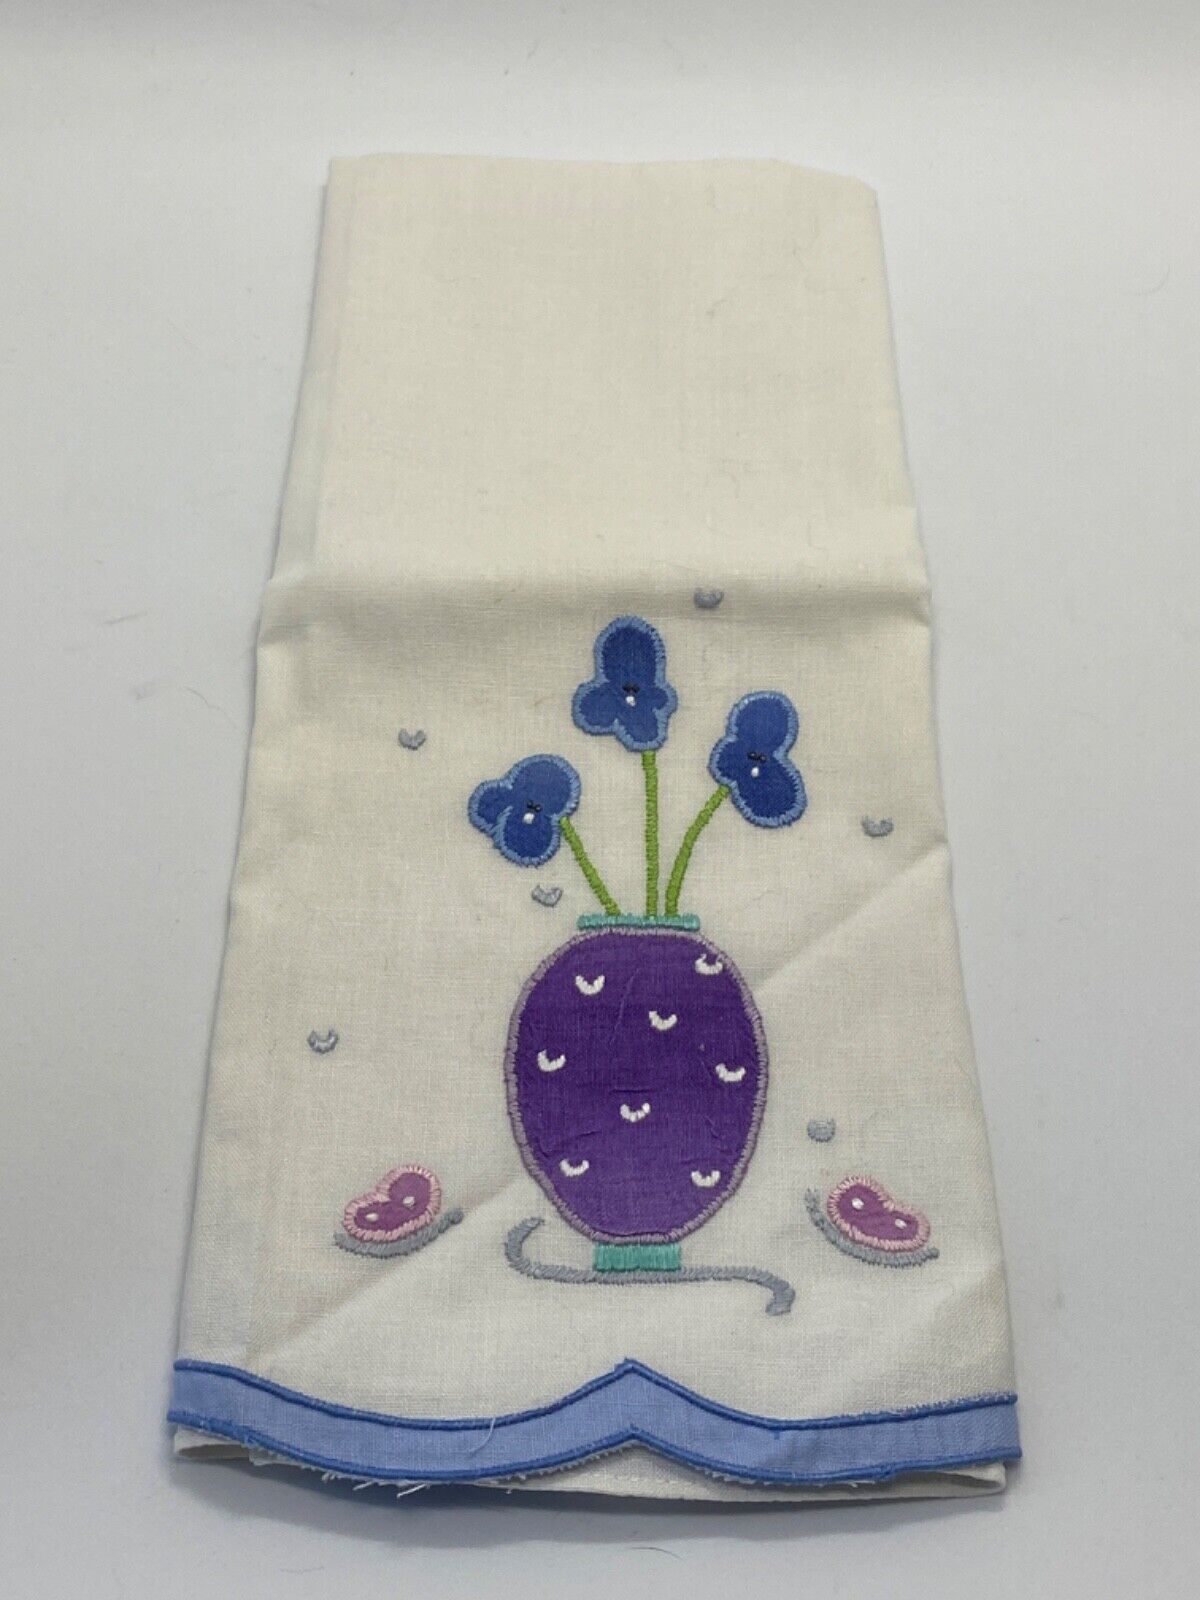 VTG White Appliquéd Embroidered Linen Hand Towel, Flower, Butterfly, Cottagecore